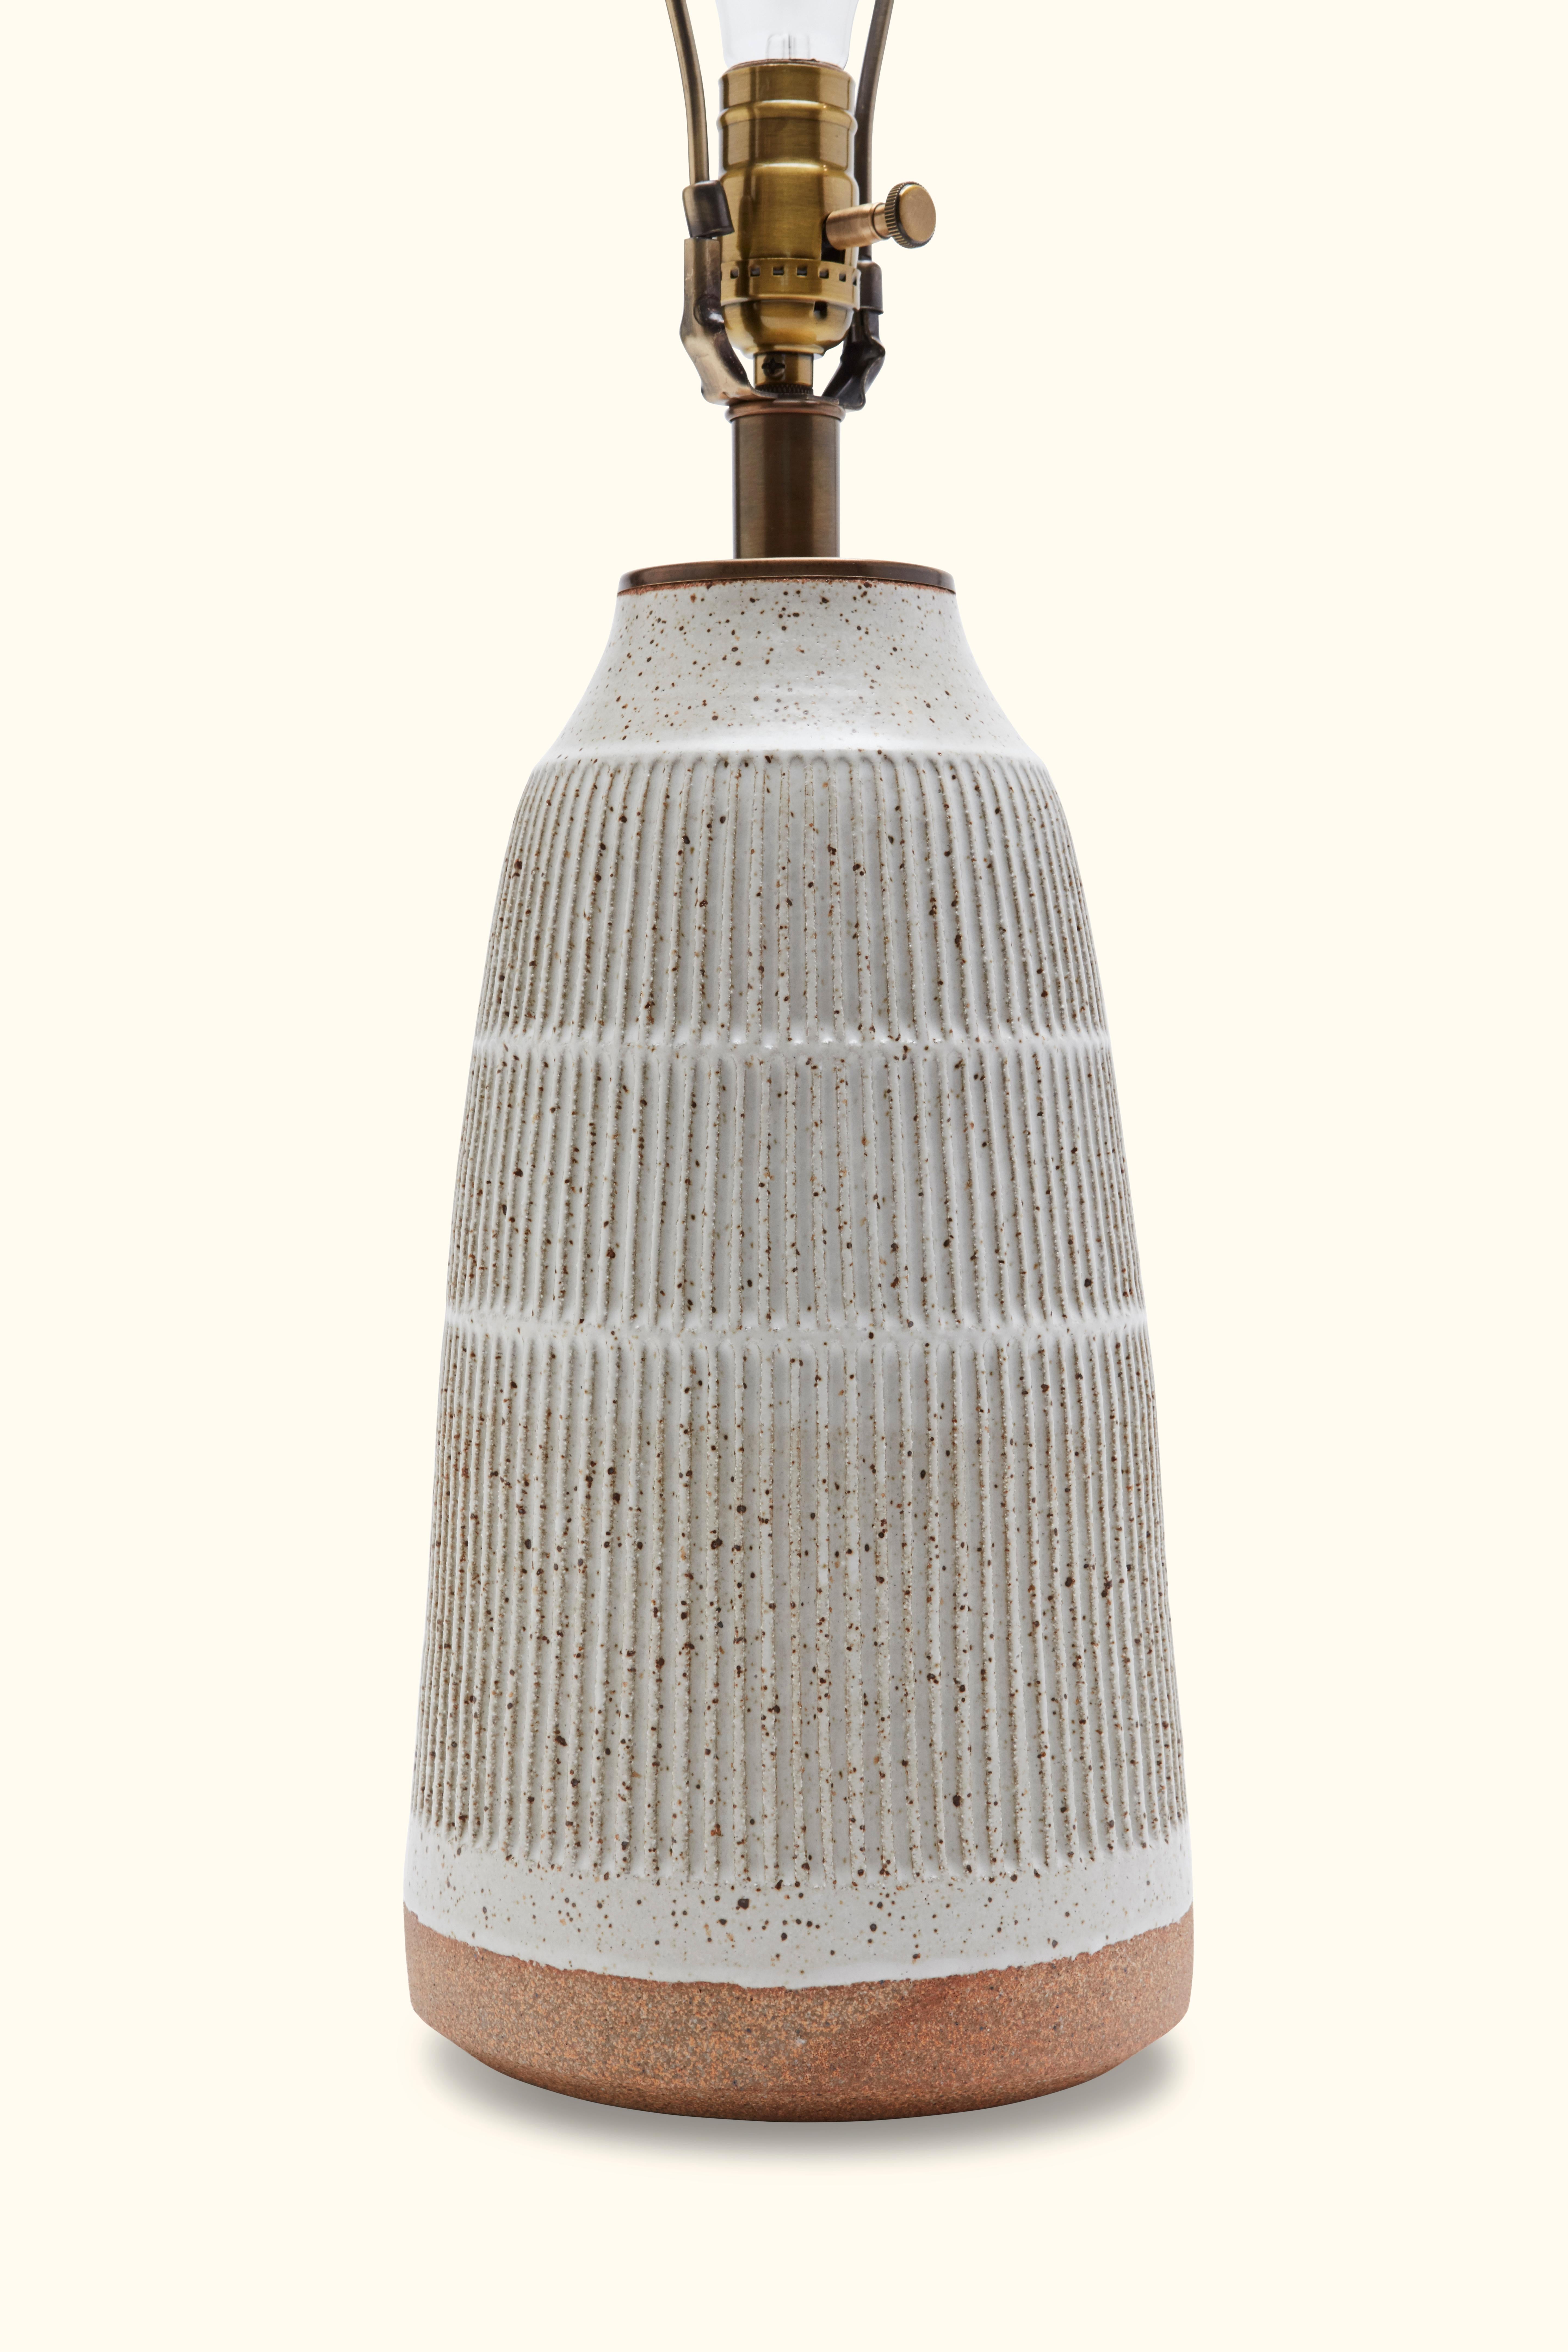 Mid-Century Modern Tall Column Lamp by Mt. Washington Pottery for Lawson-Fenning